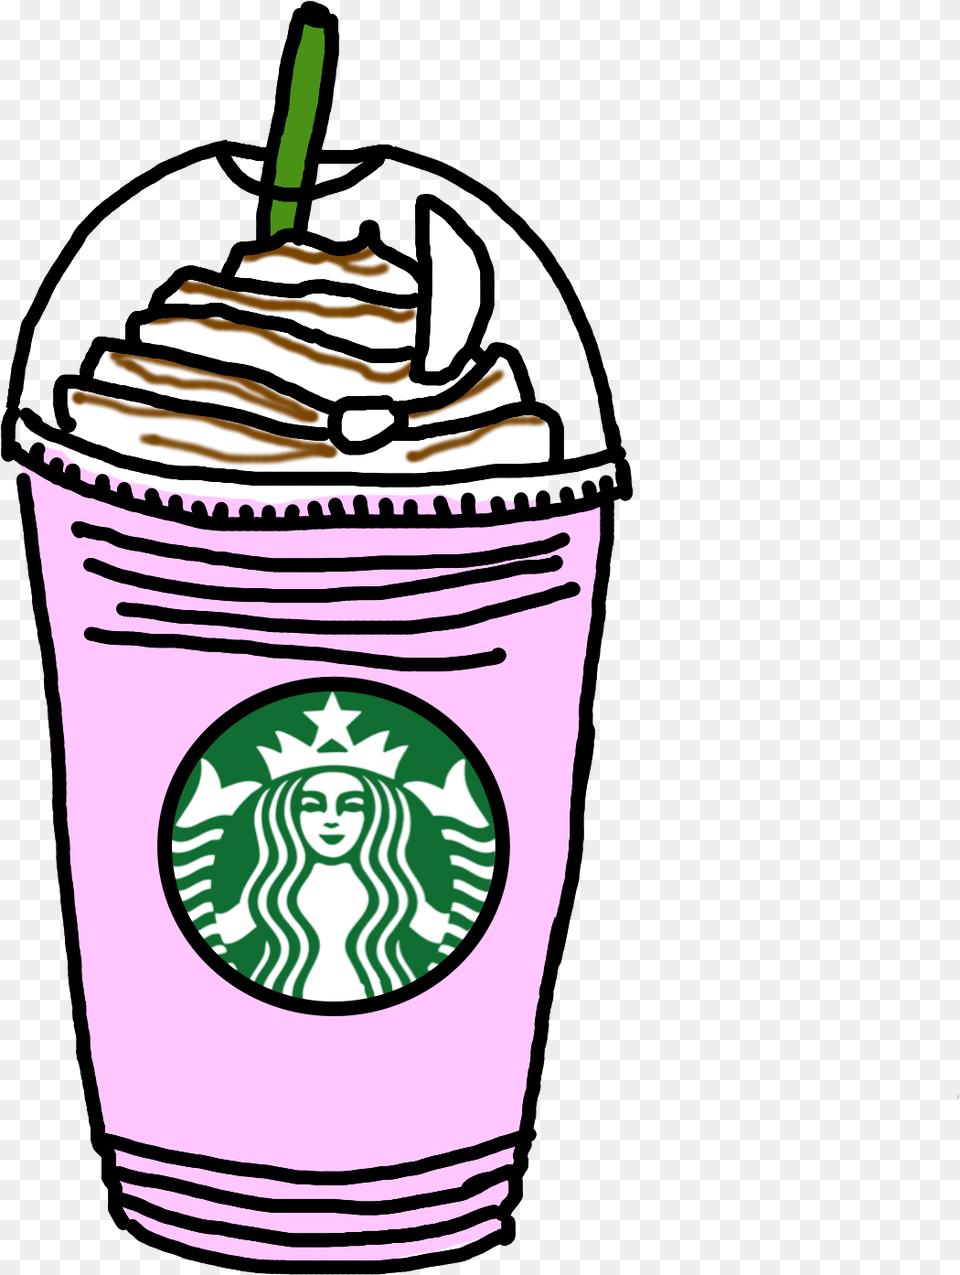 Menu Coffee Drink Starbucks Hd Clipart Starbucks Drinks Clip Art, Cream, Dessert, Food, Ice Cream Png Image